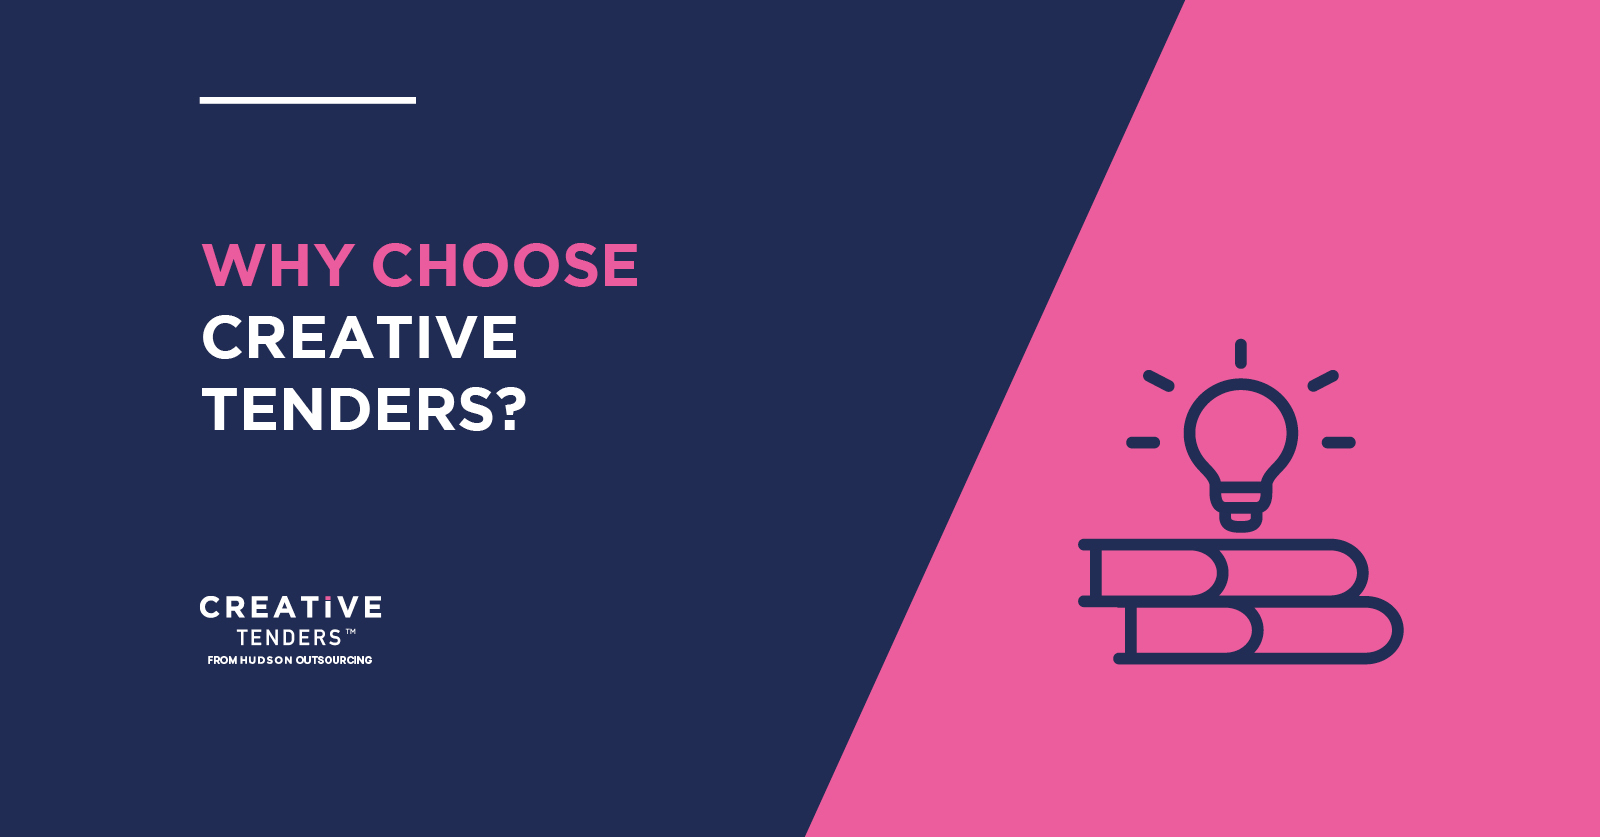 WHY CHOOSE CREATIVE TENDERS? Helping you discover Creative Bids!